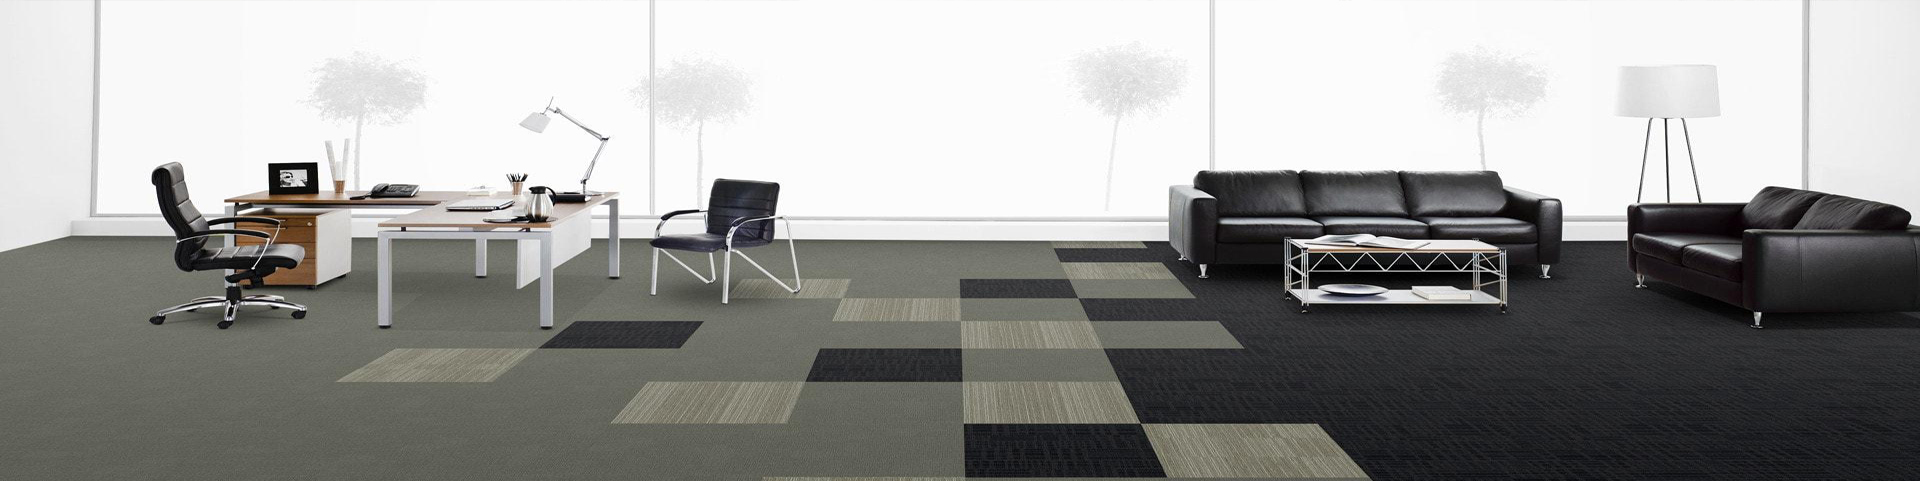 Luxuria Carpet Tiles